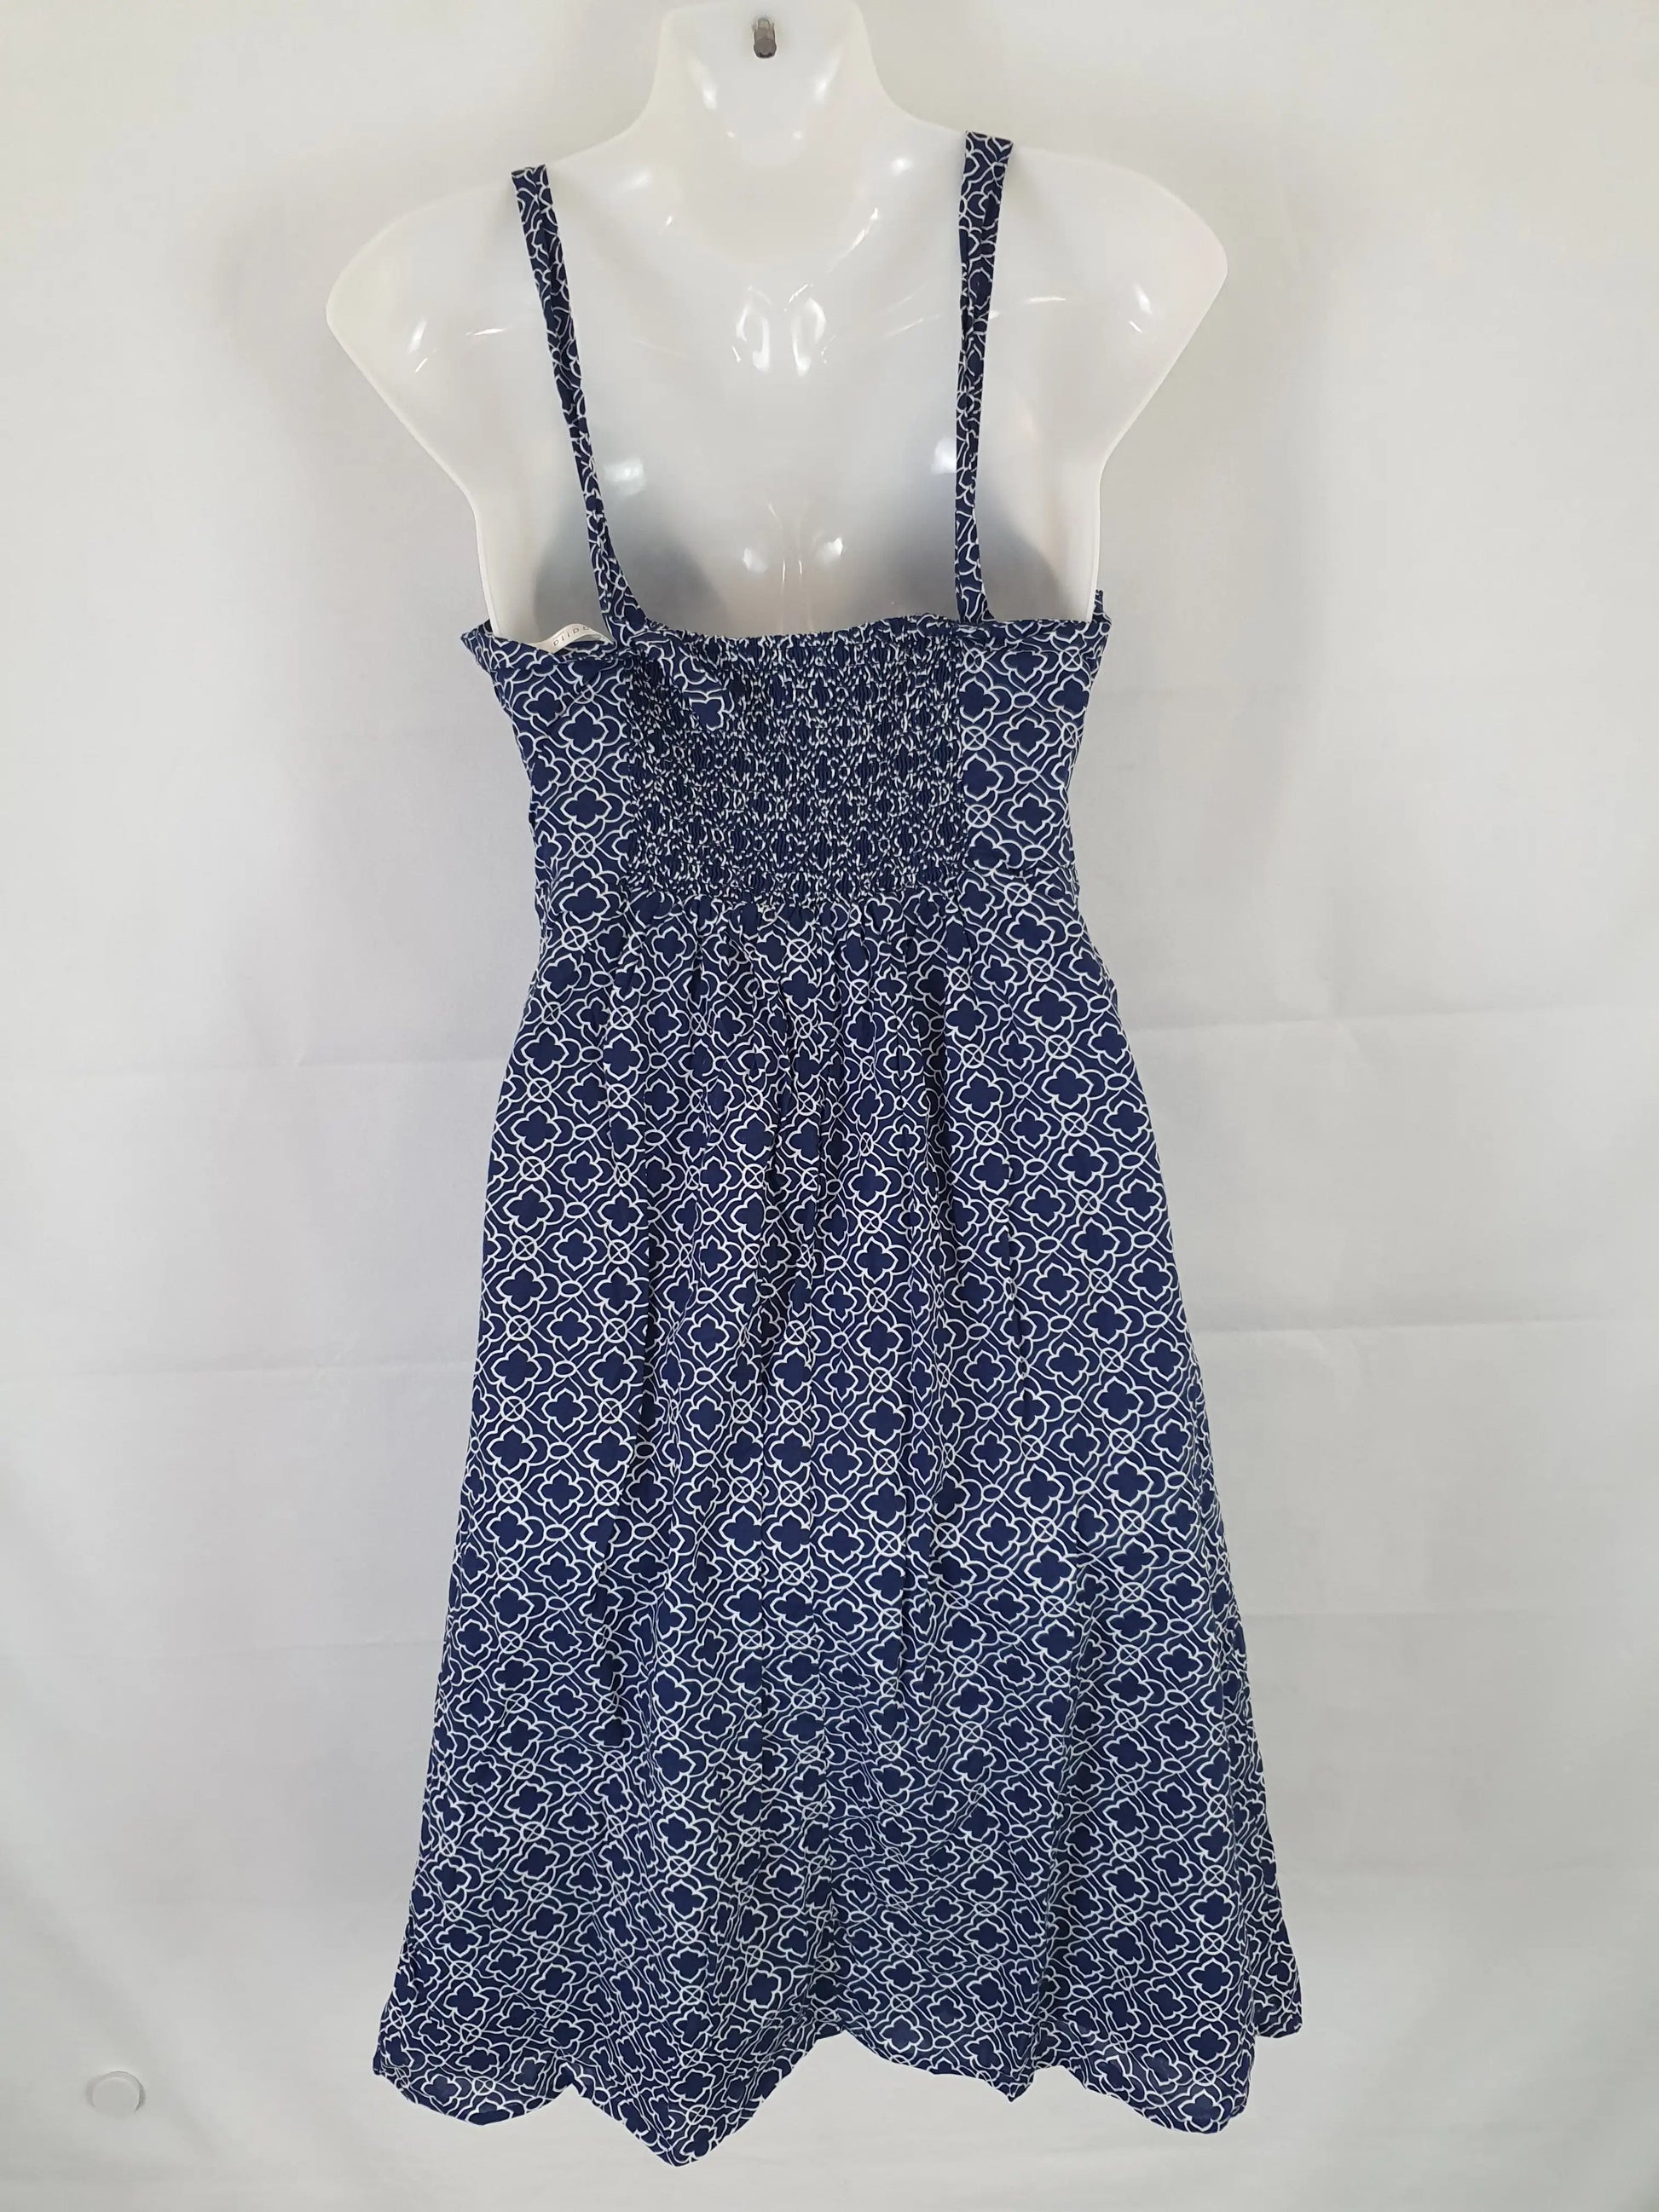 Regatta Summer Boat Midi Dress Size 10 Petite by SwapUp-Second Hand Shop-Thrift Store-Op Shop 